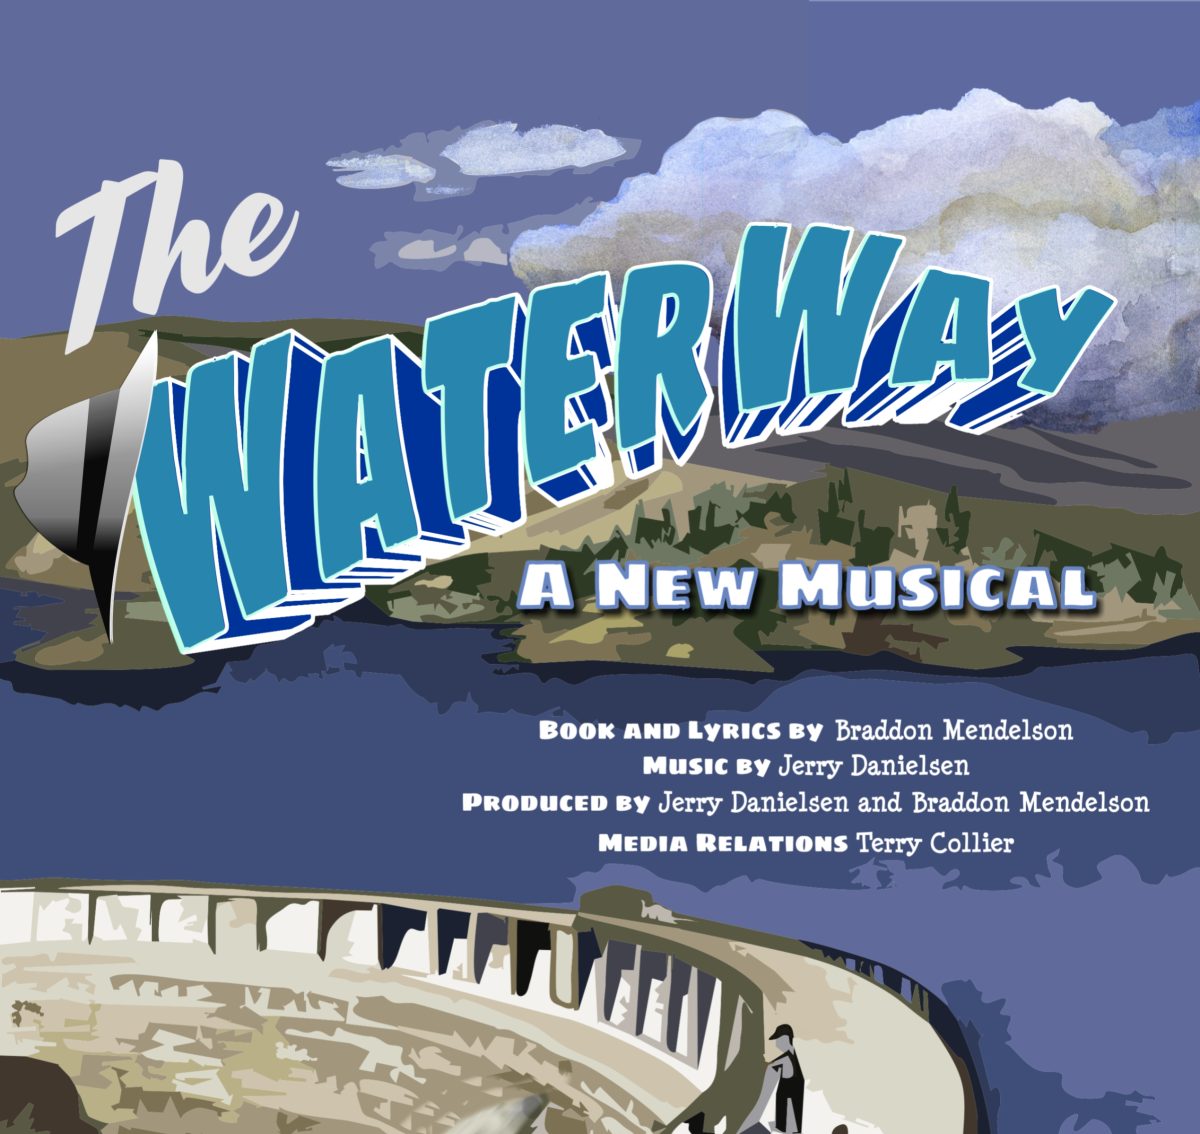 The WaterWay musical